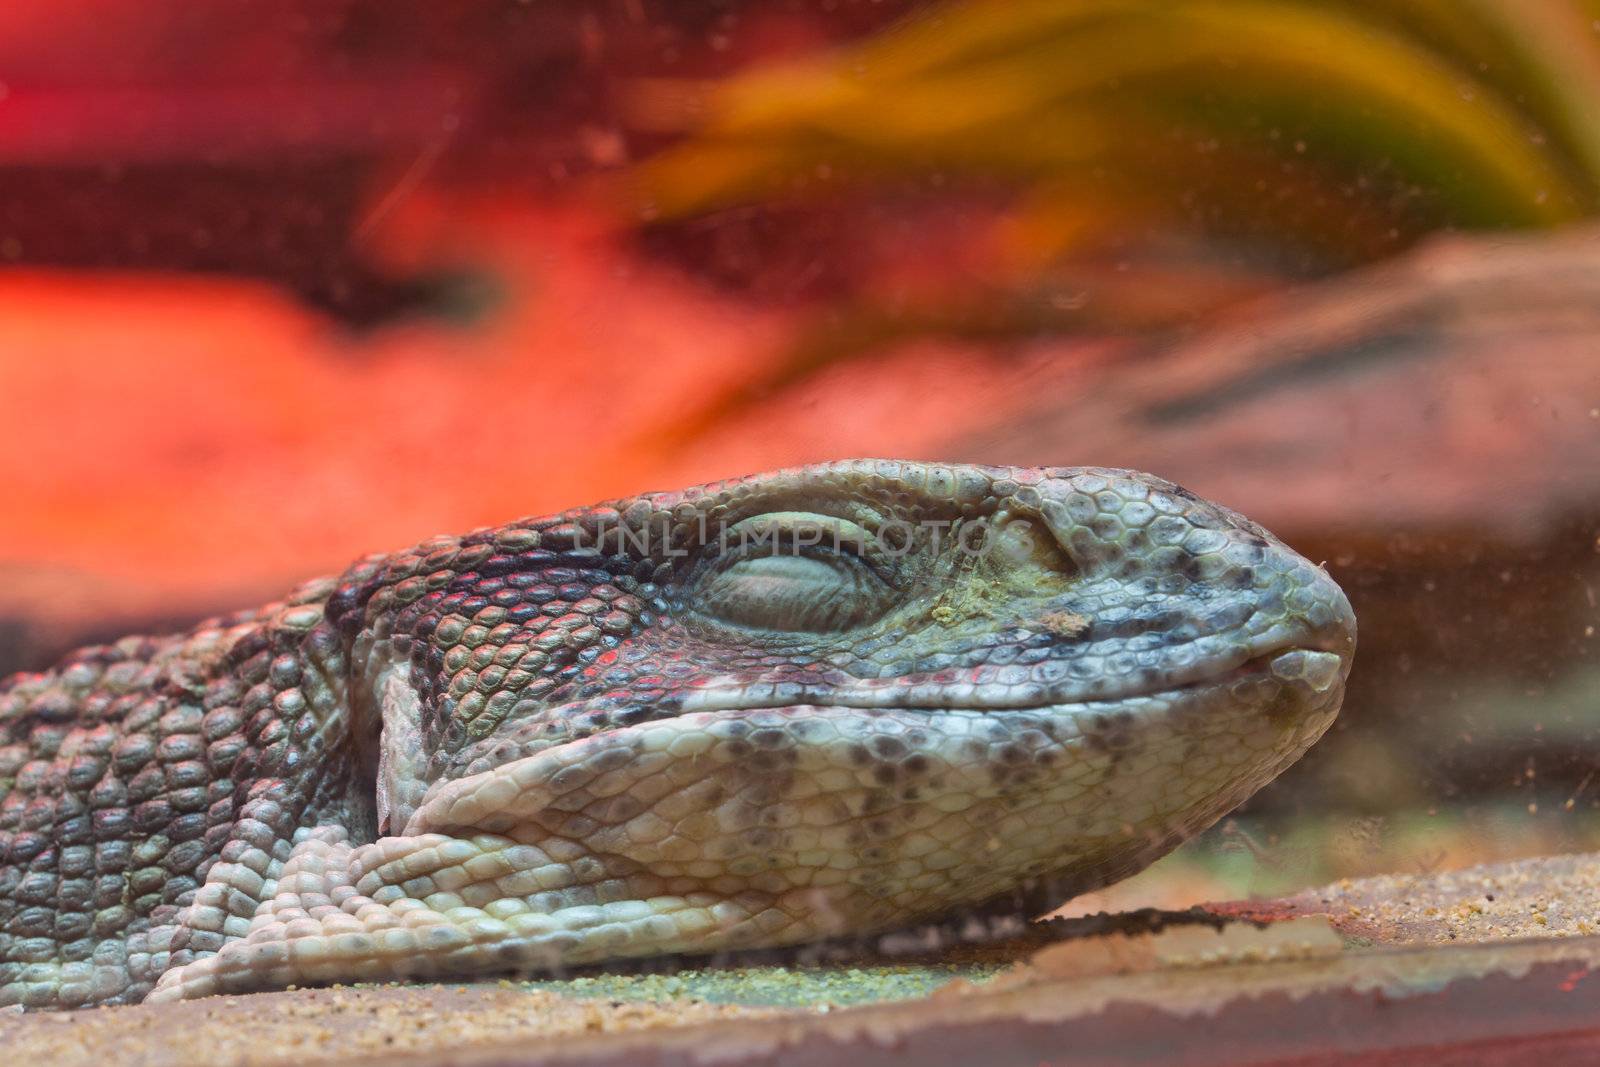 smiling face of little lizard by FrameAngel